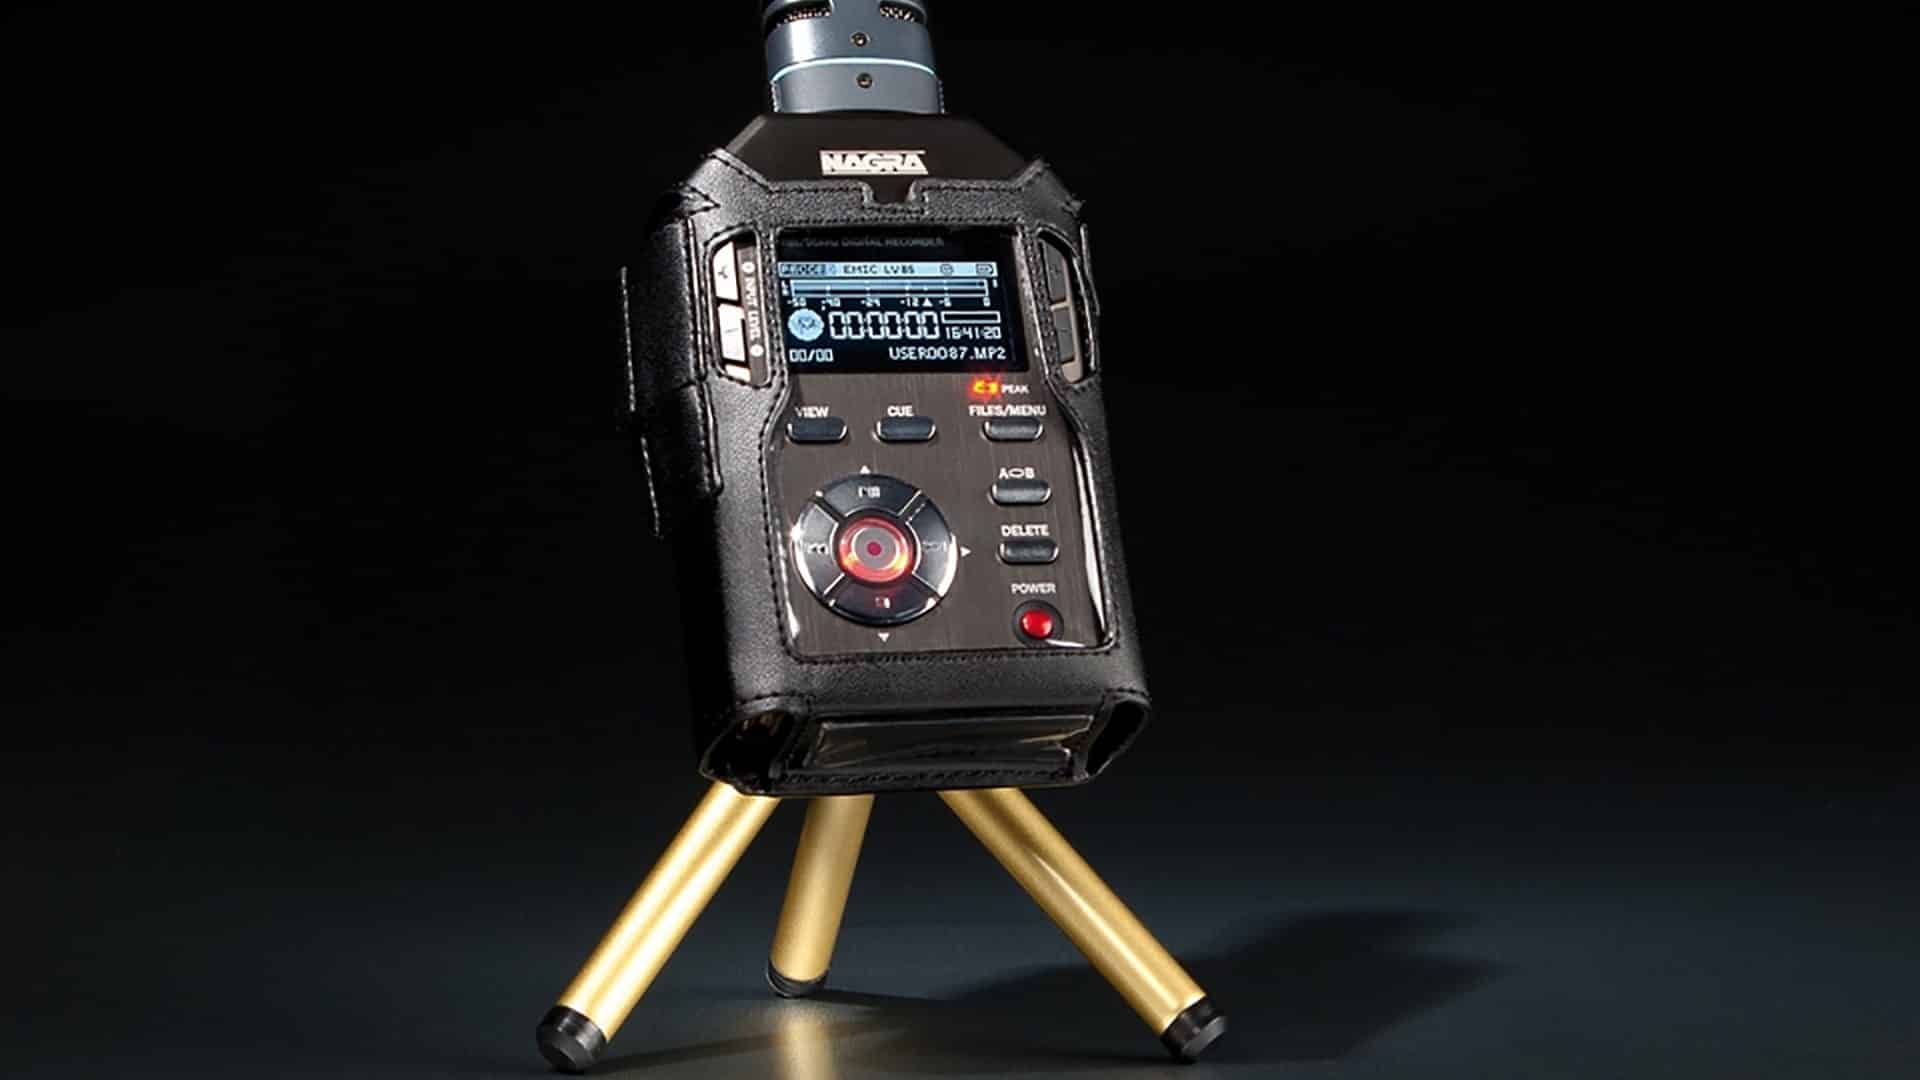 Nagra SD recorder mic handheld tripod case front